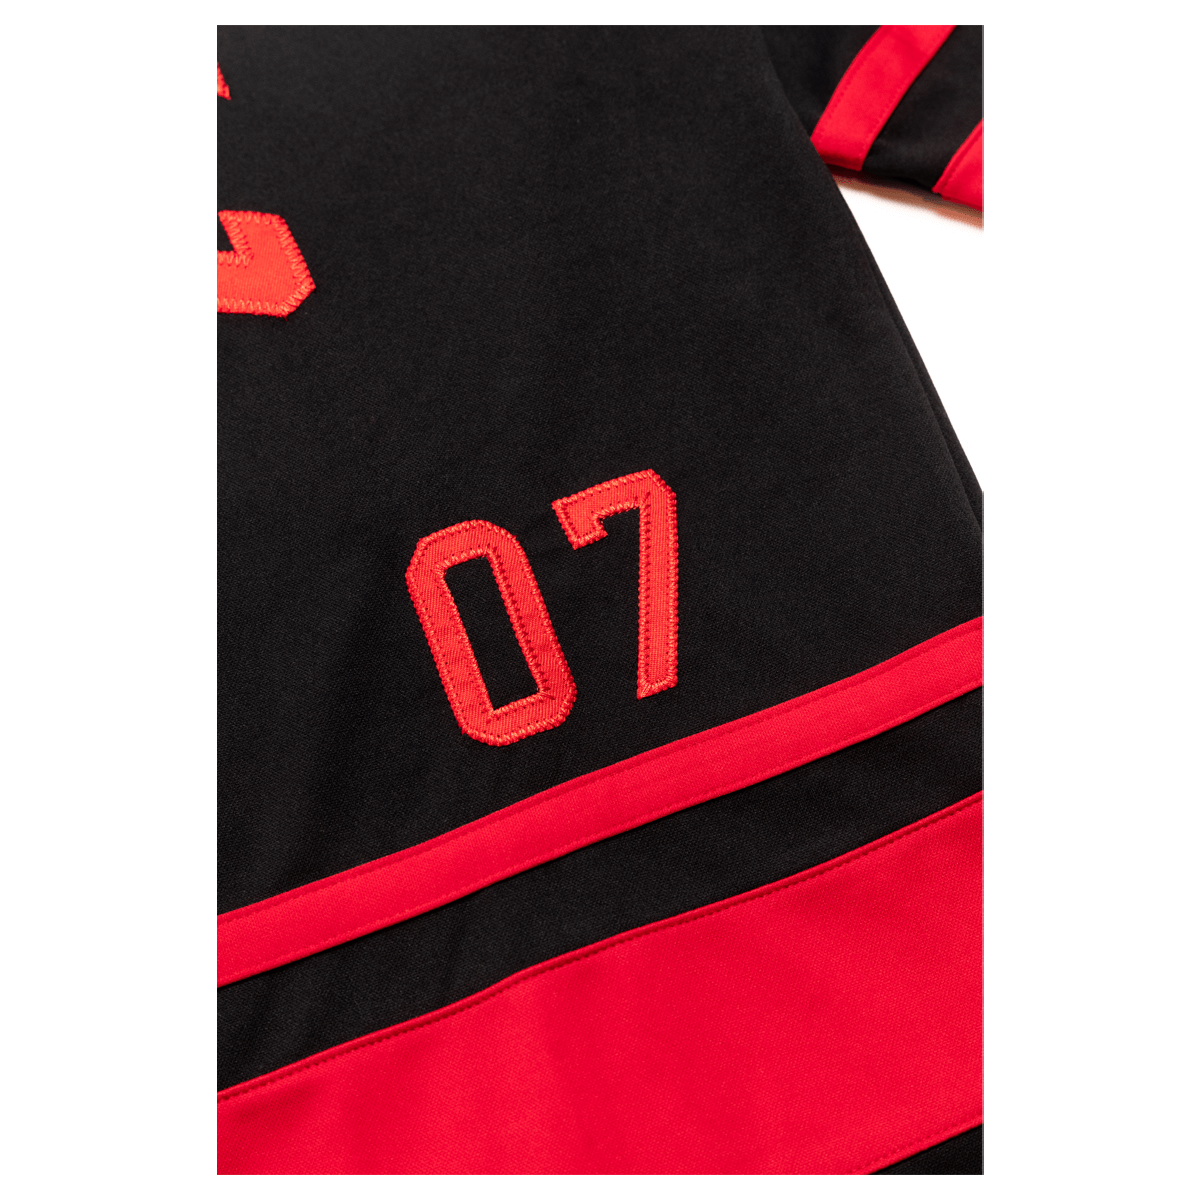 TMC Hockey Jersey - Black/Red-The Marathon Clothing